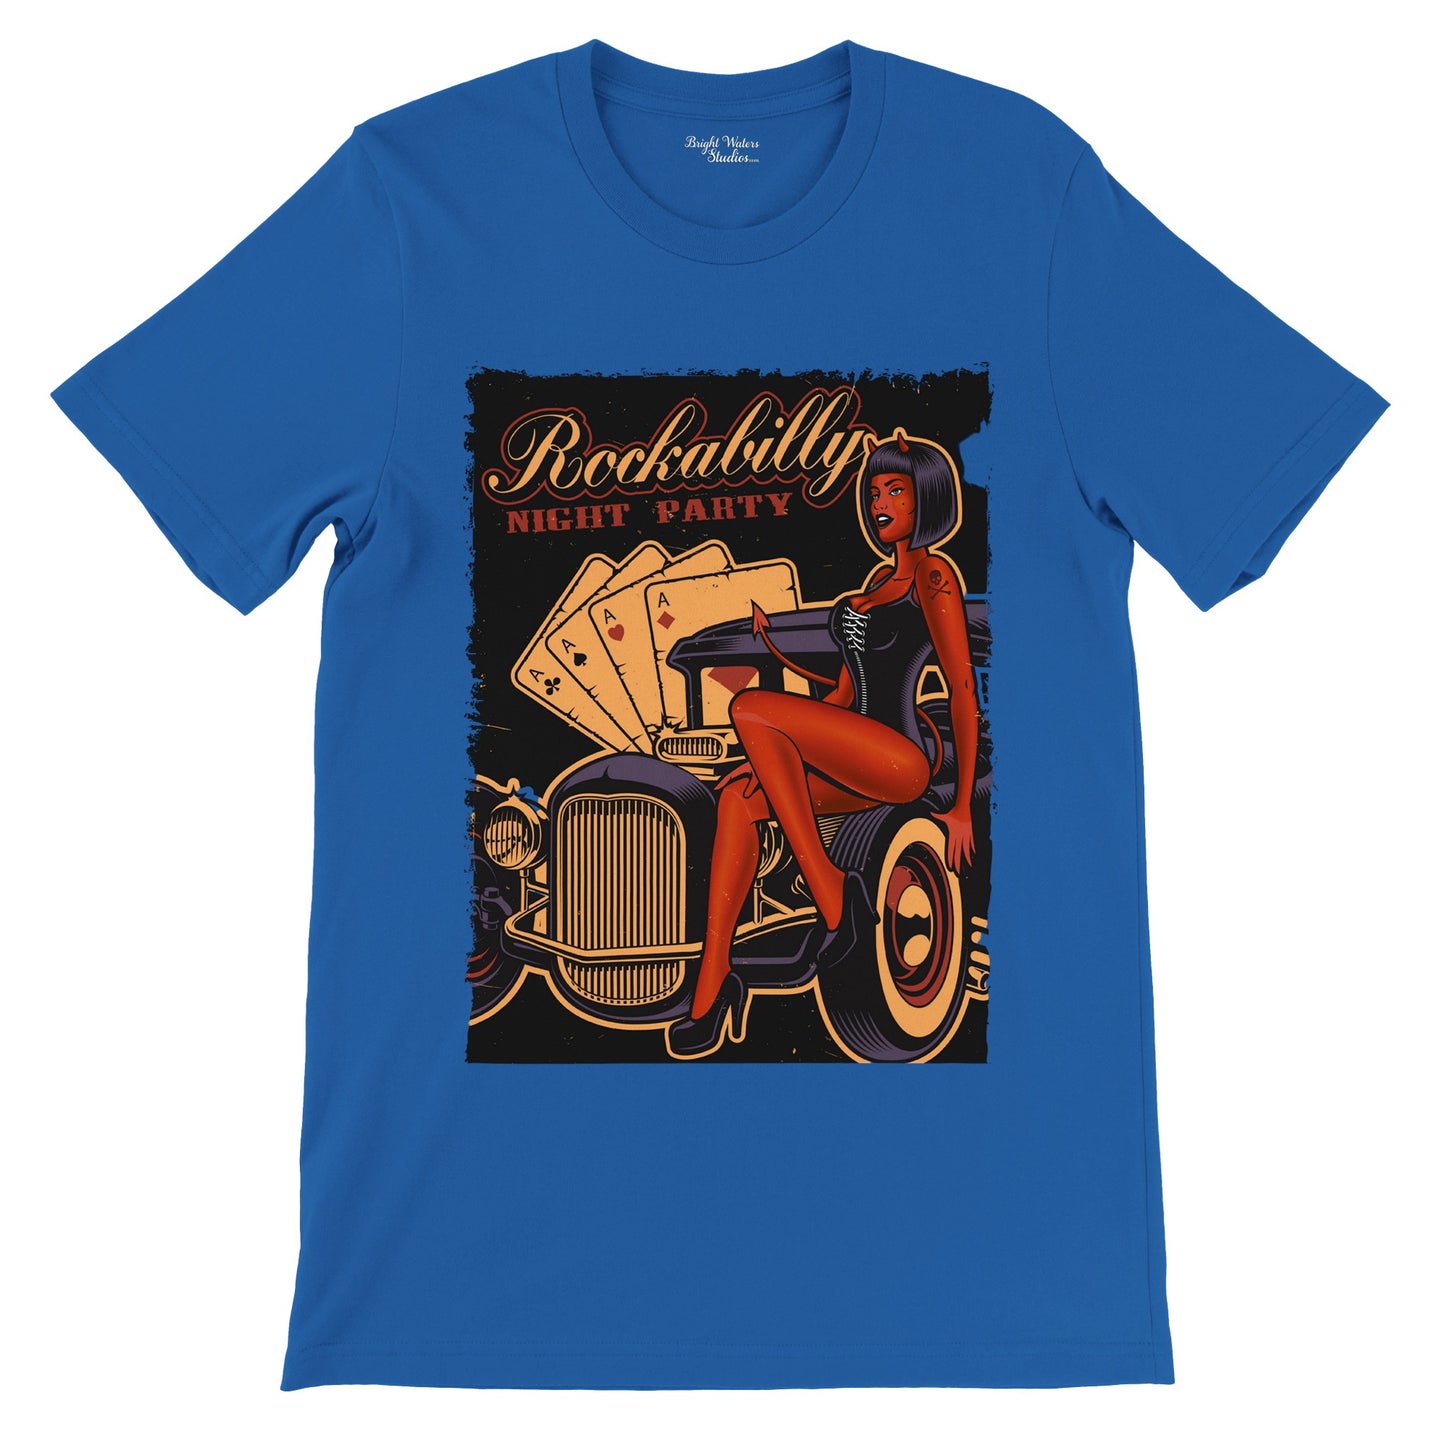 Rockabilly Night Party T-shirt